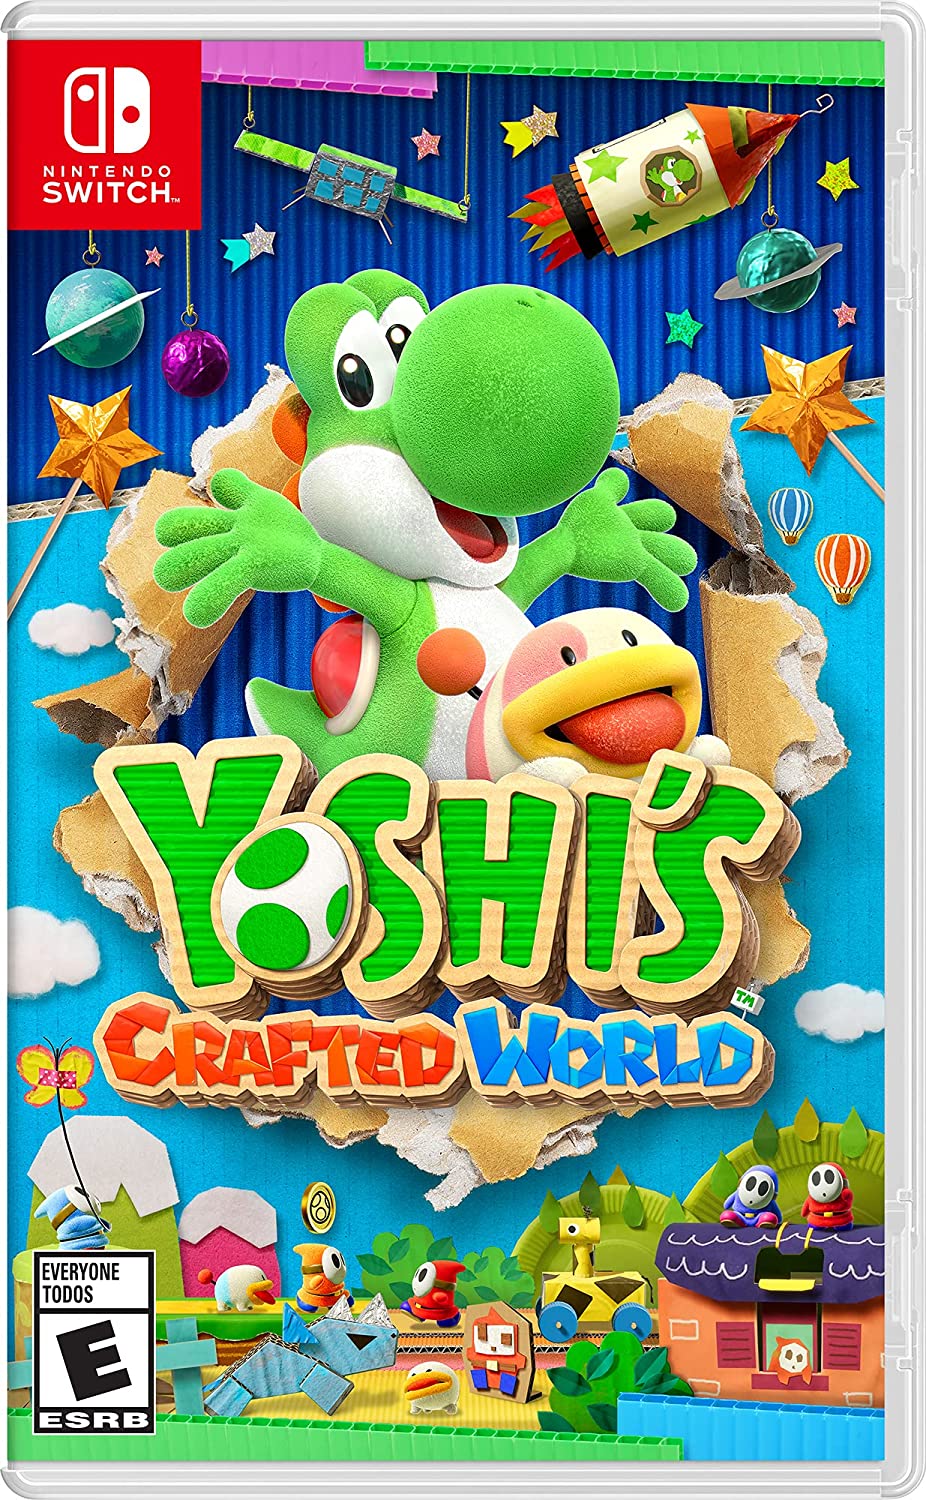 Yoshis Crafted World Nintendo Switch artwork.